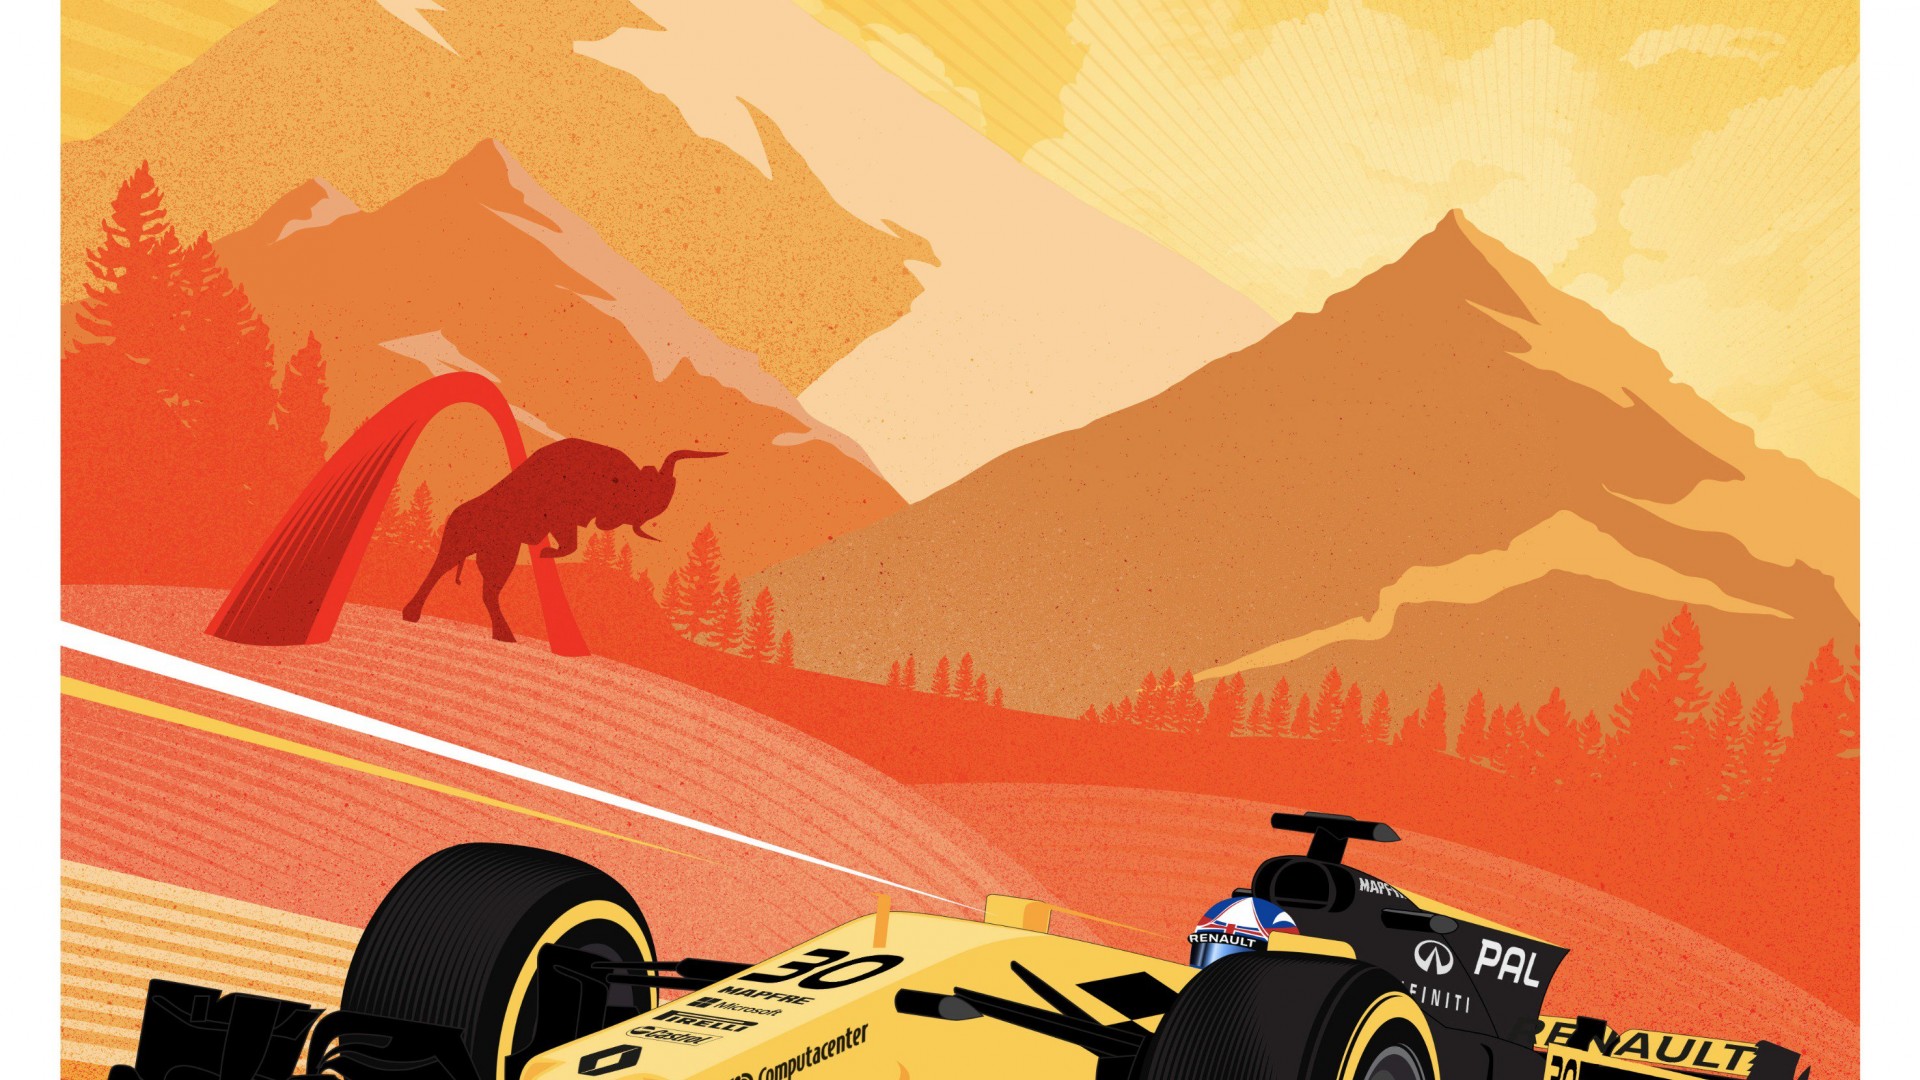 Renault Formula 1 - Austria 2017 Poster